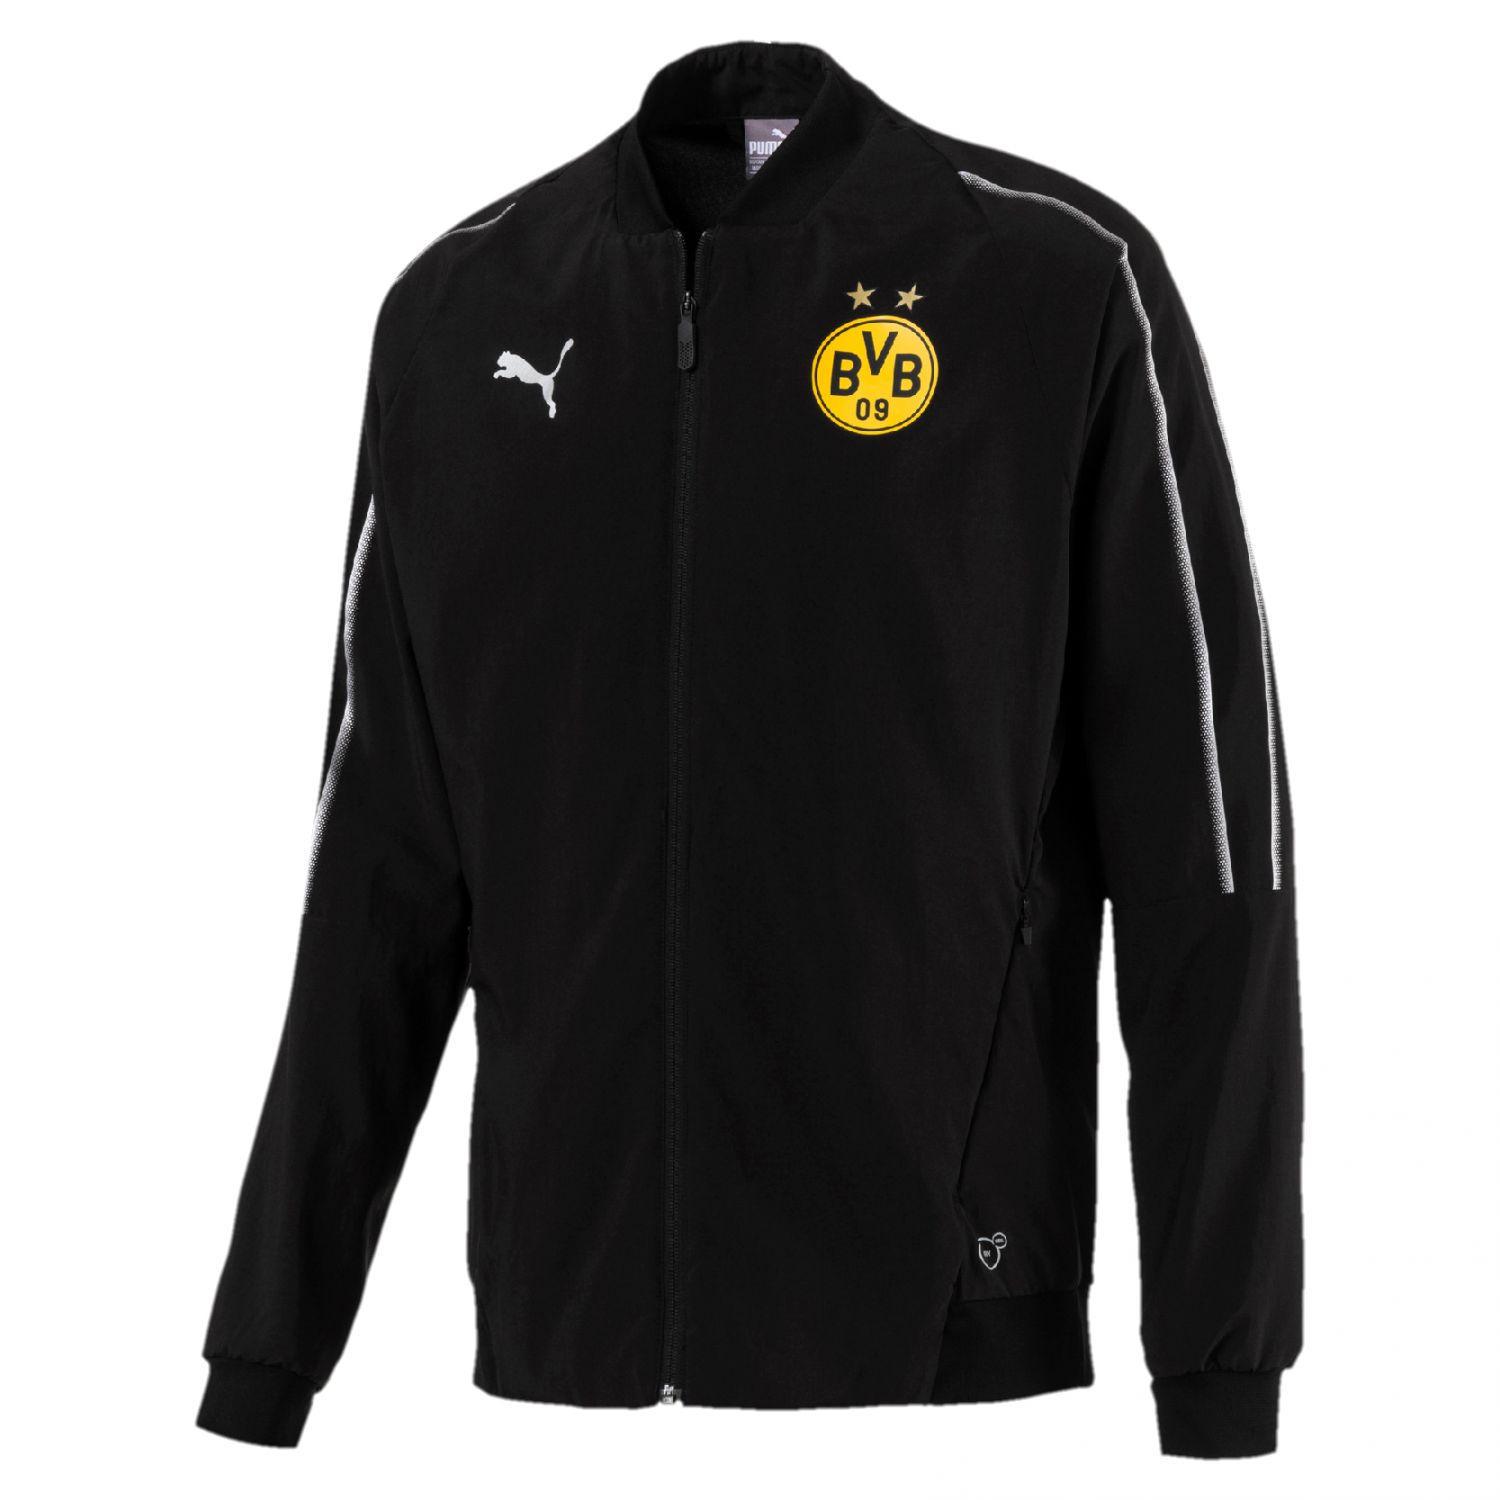 Puma Borussia Dortmund Leisure Jacket